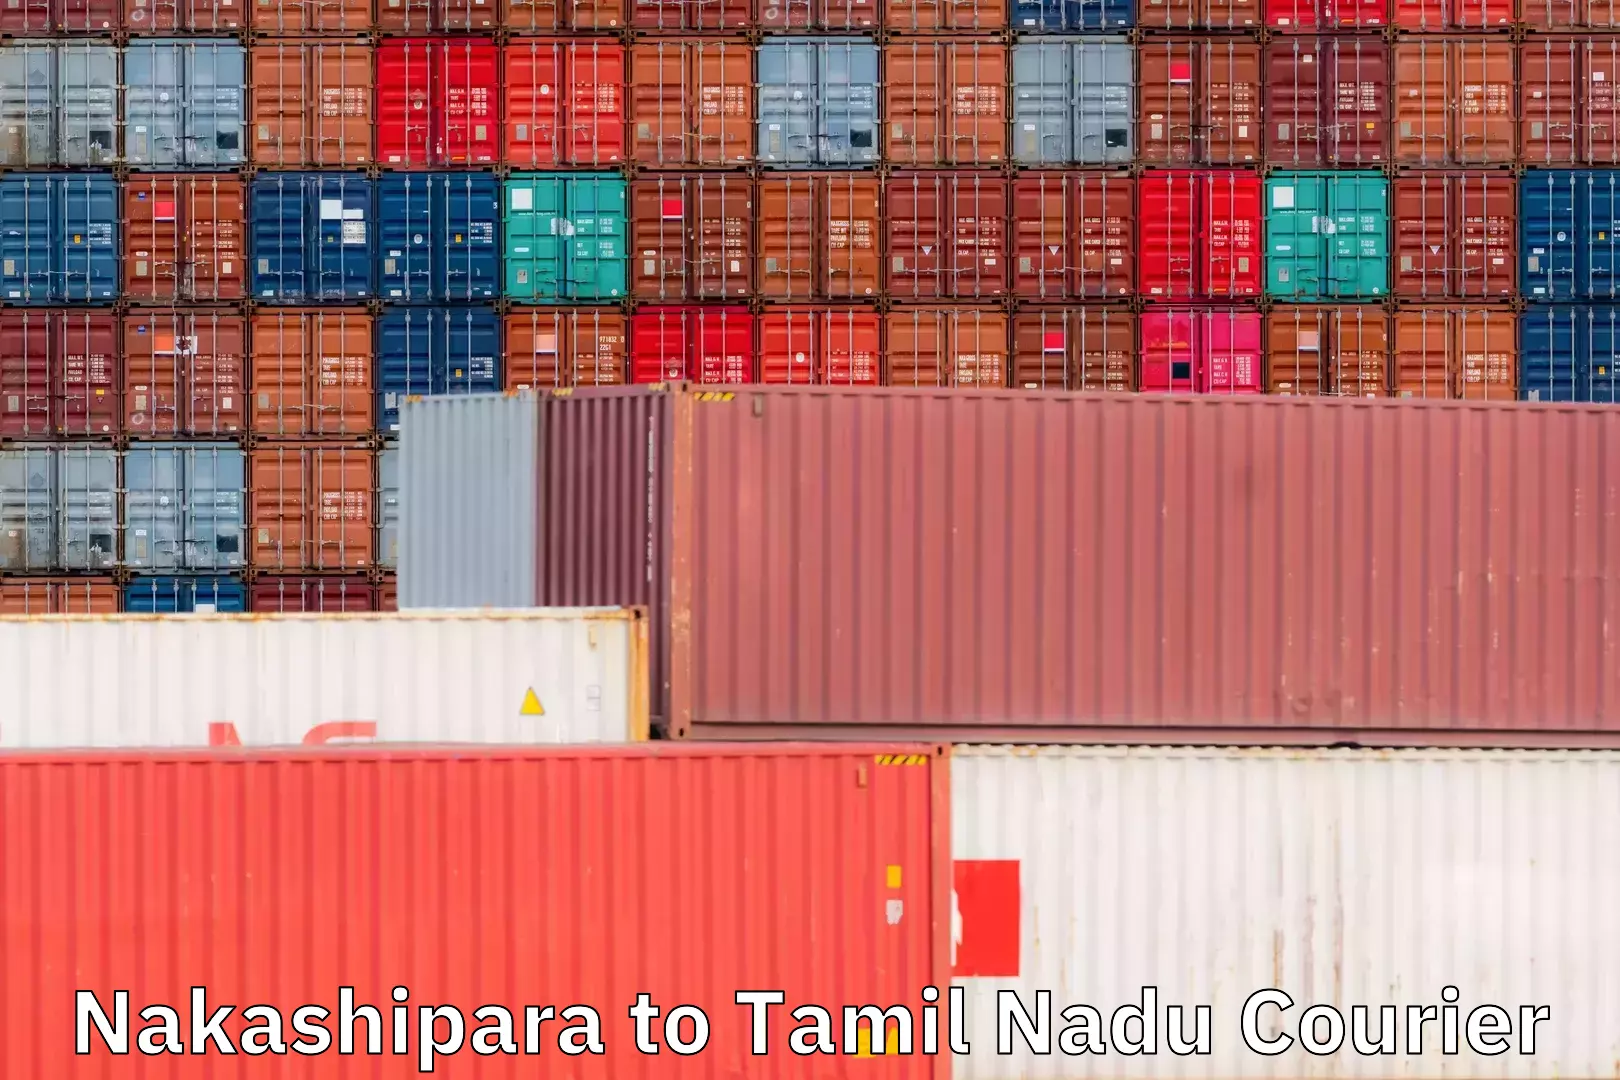 Comprehensive shipping strategies Nakashipara to Tamil Nadu Veterinary and Animal Sciences University Chennai